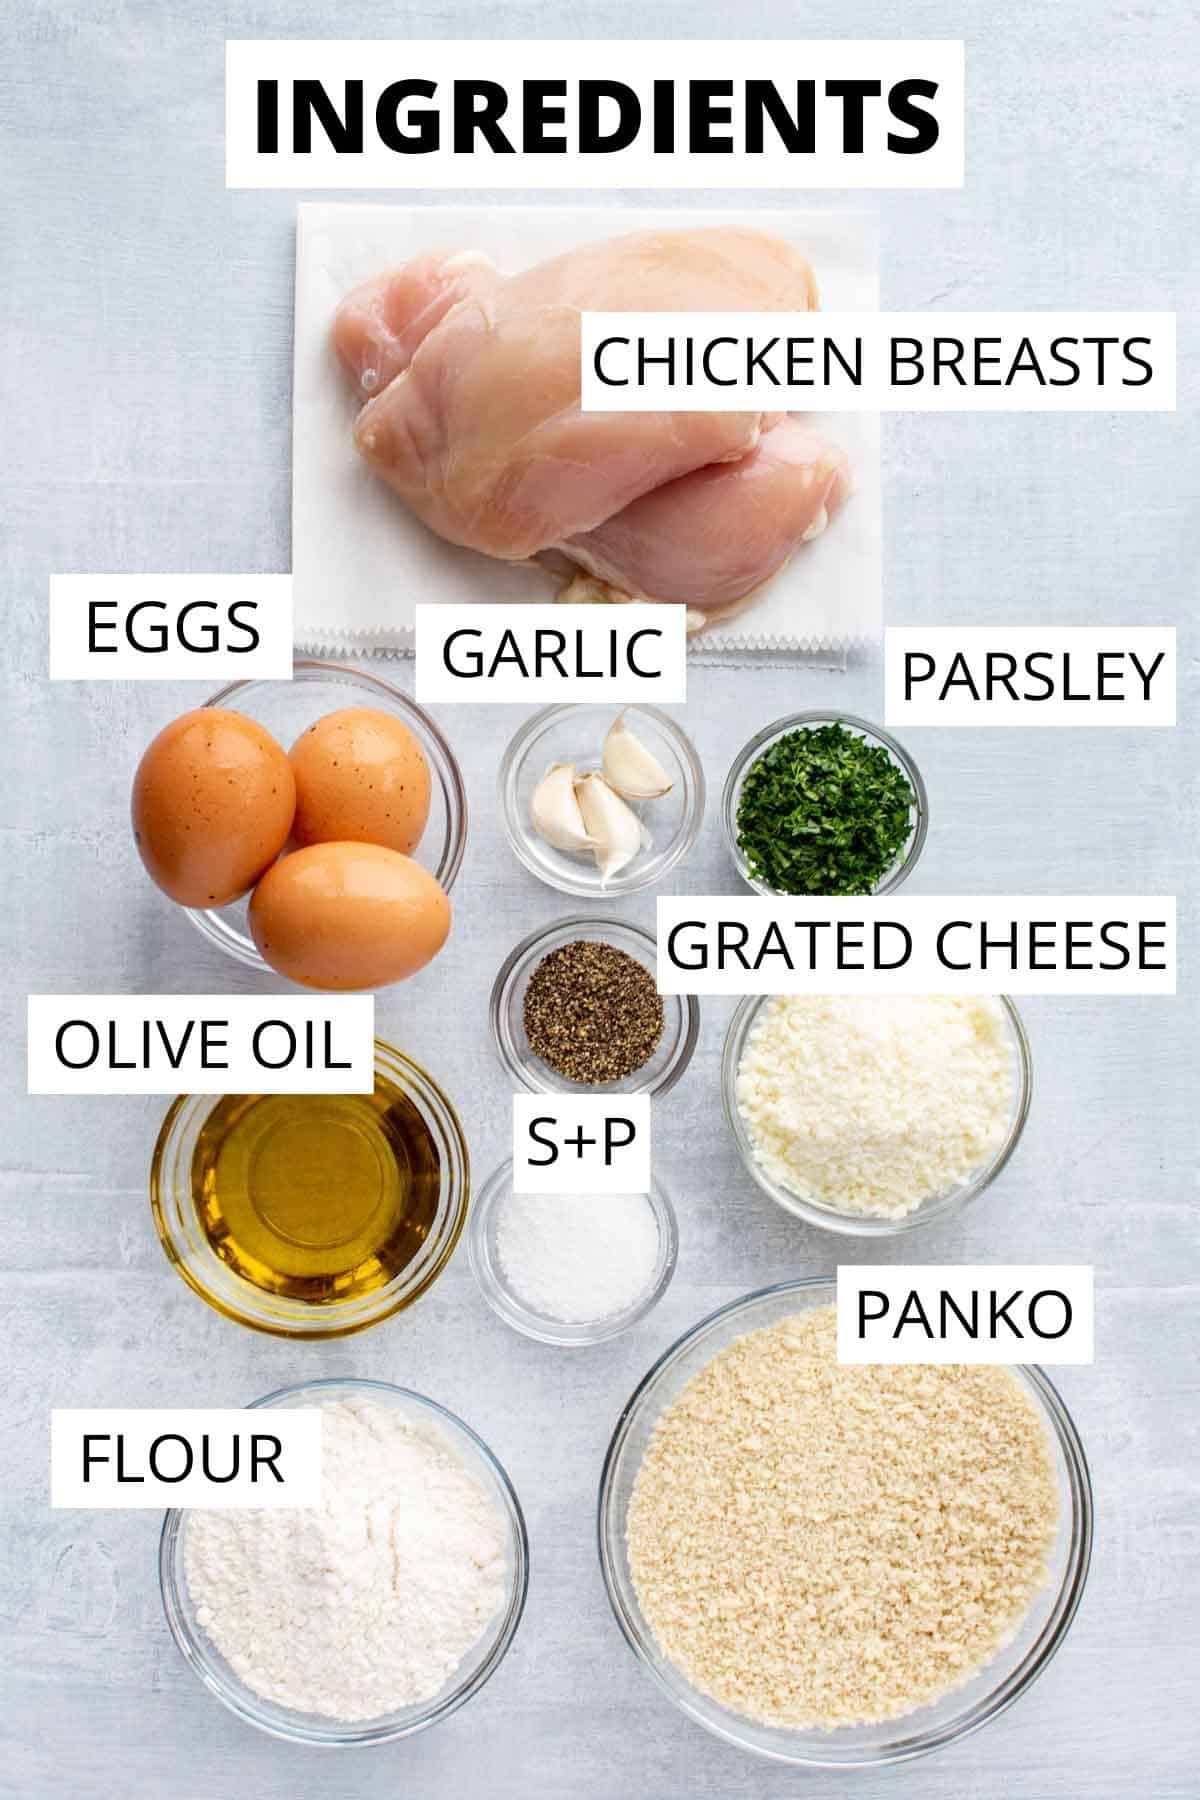 Ingredients for Italian breaded chicken cutlets.